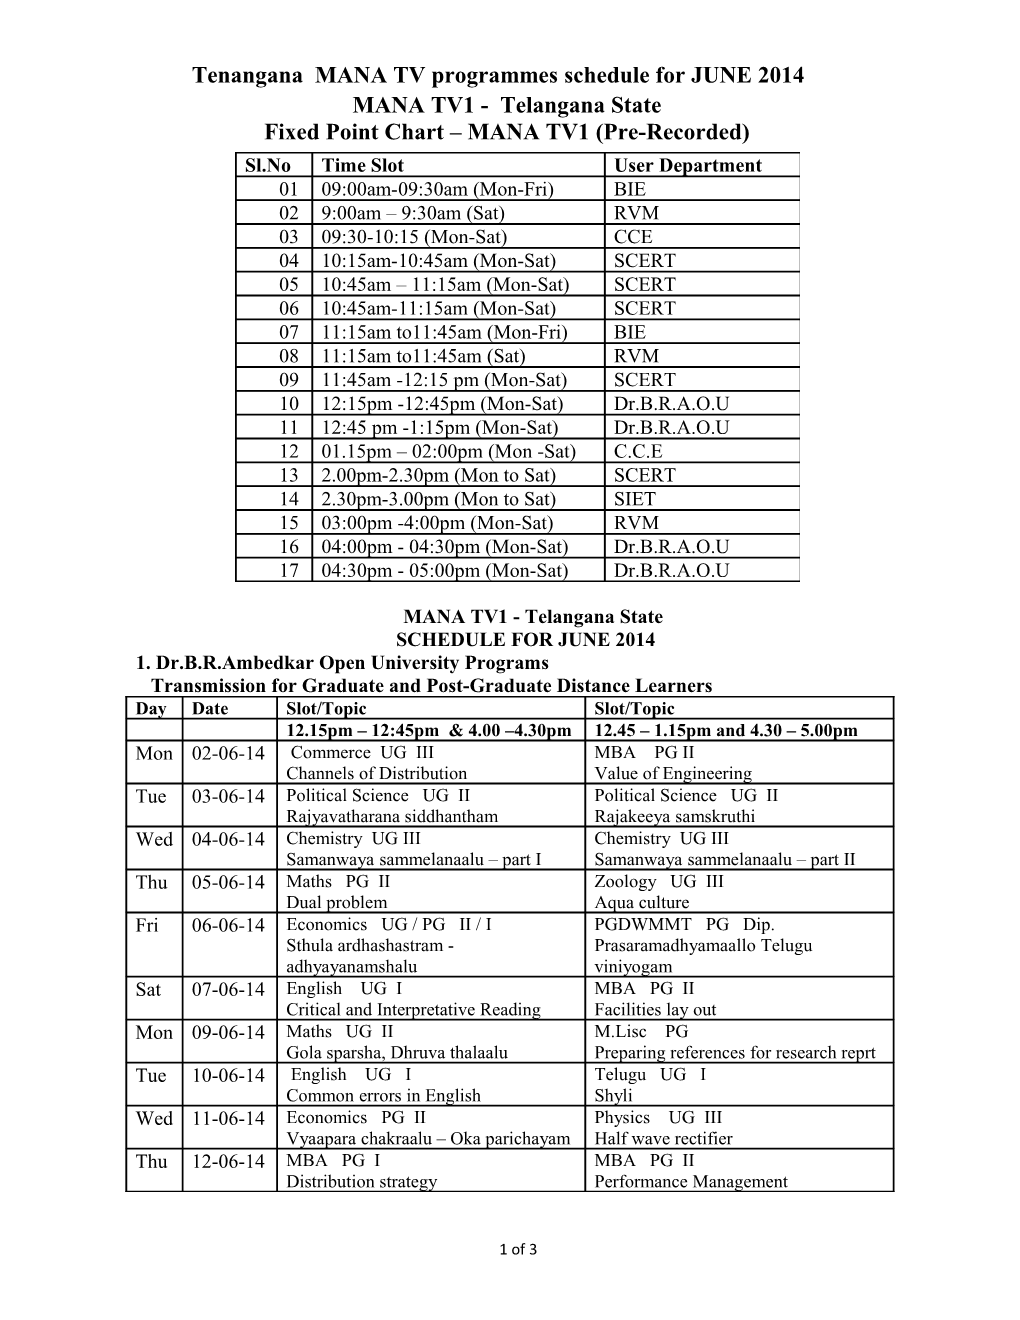 Tenangana MANA TV Programmes Schedule for JUNE2014